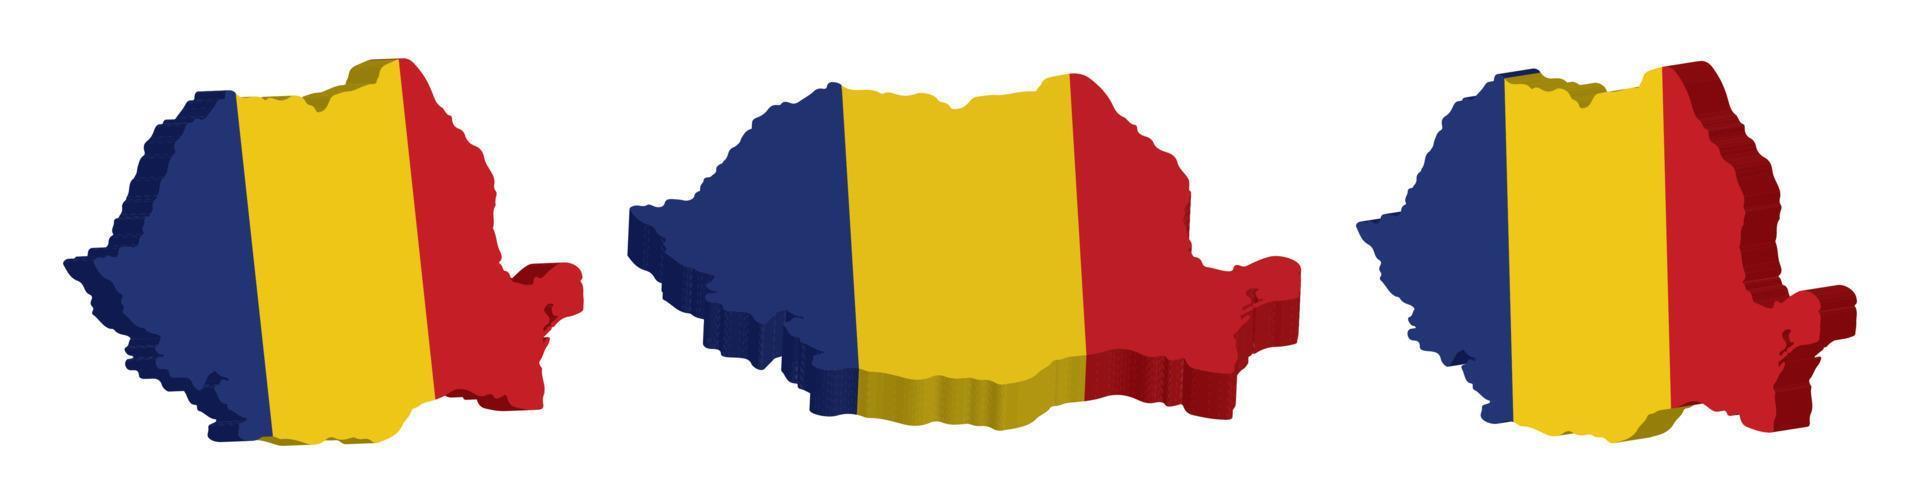 Realistic 3D Map of Romania Vector Design Template